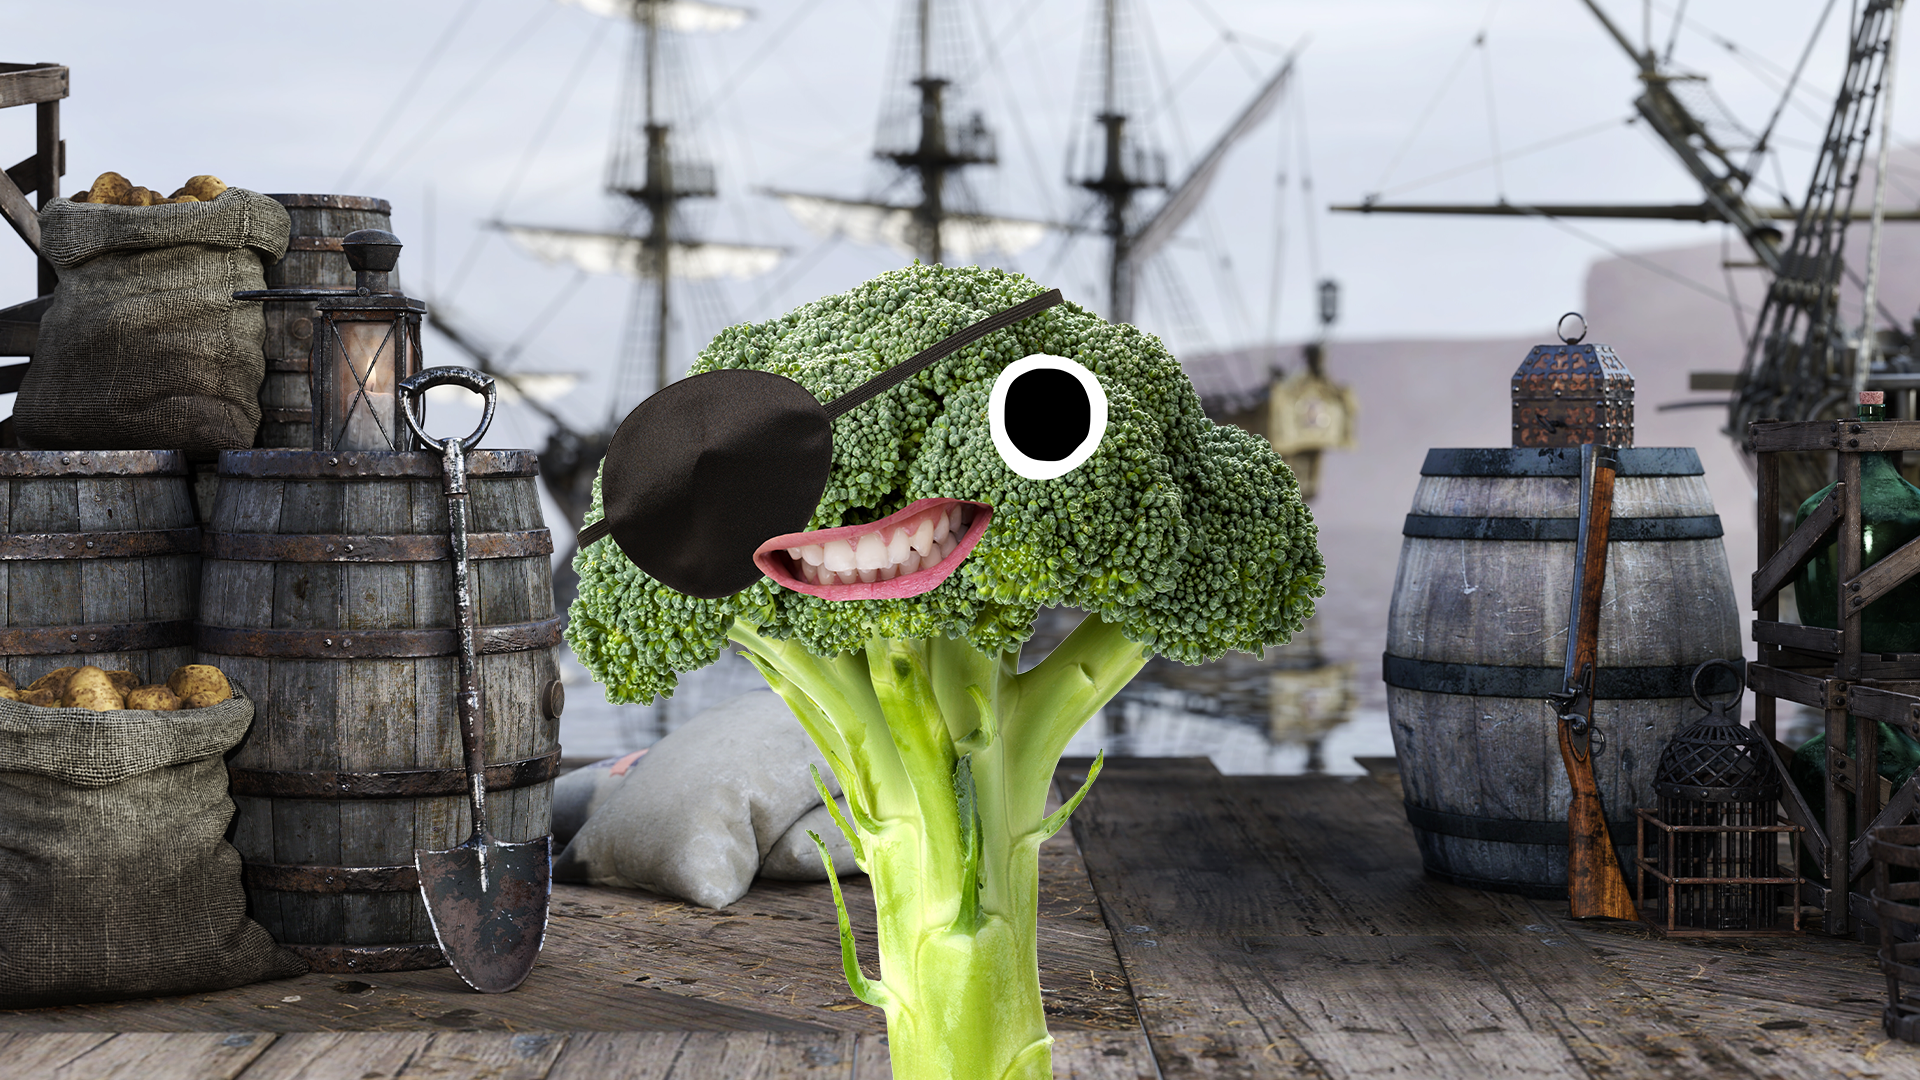 Dock scene with pirate brocolli